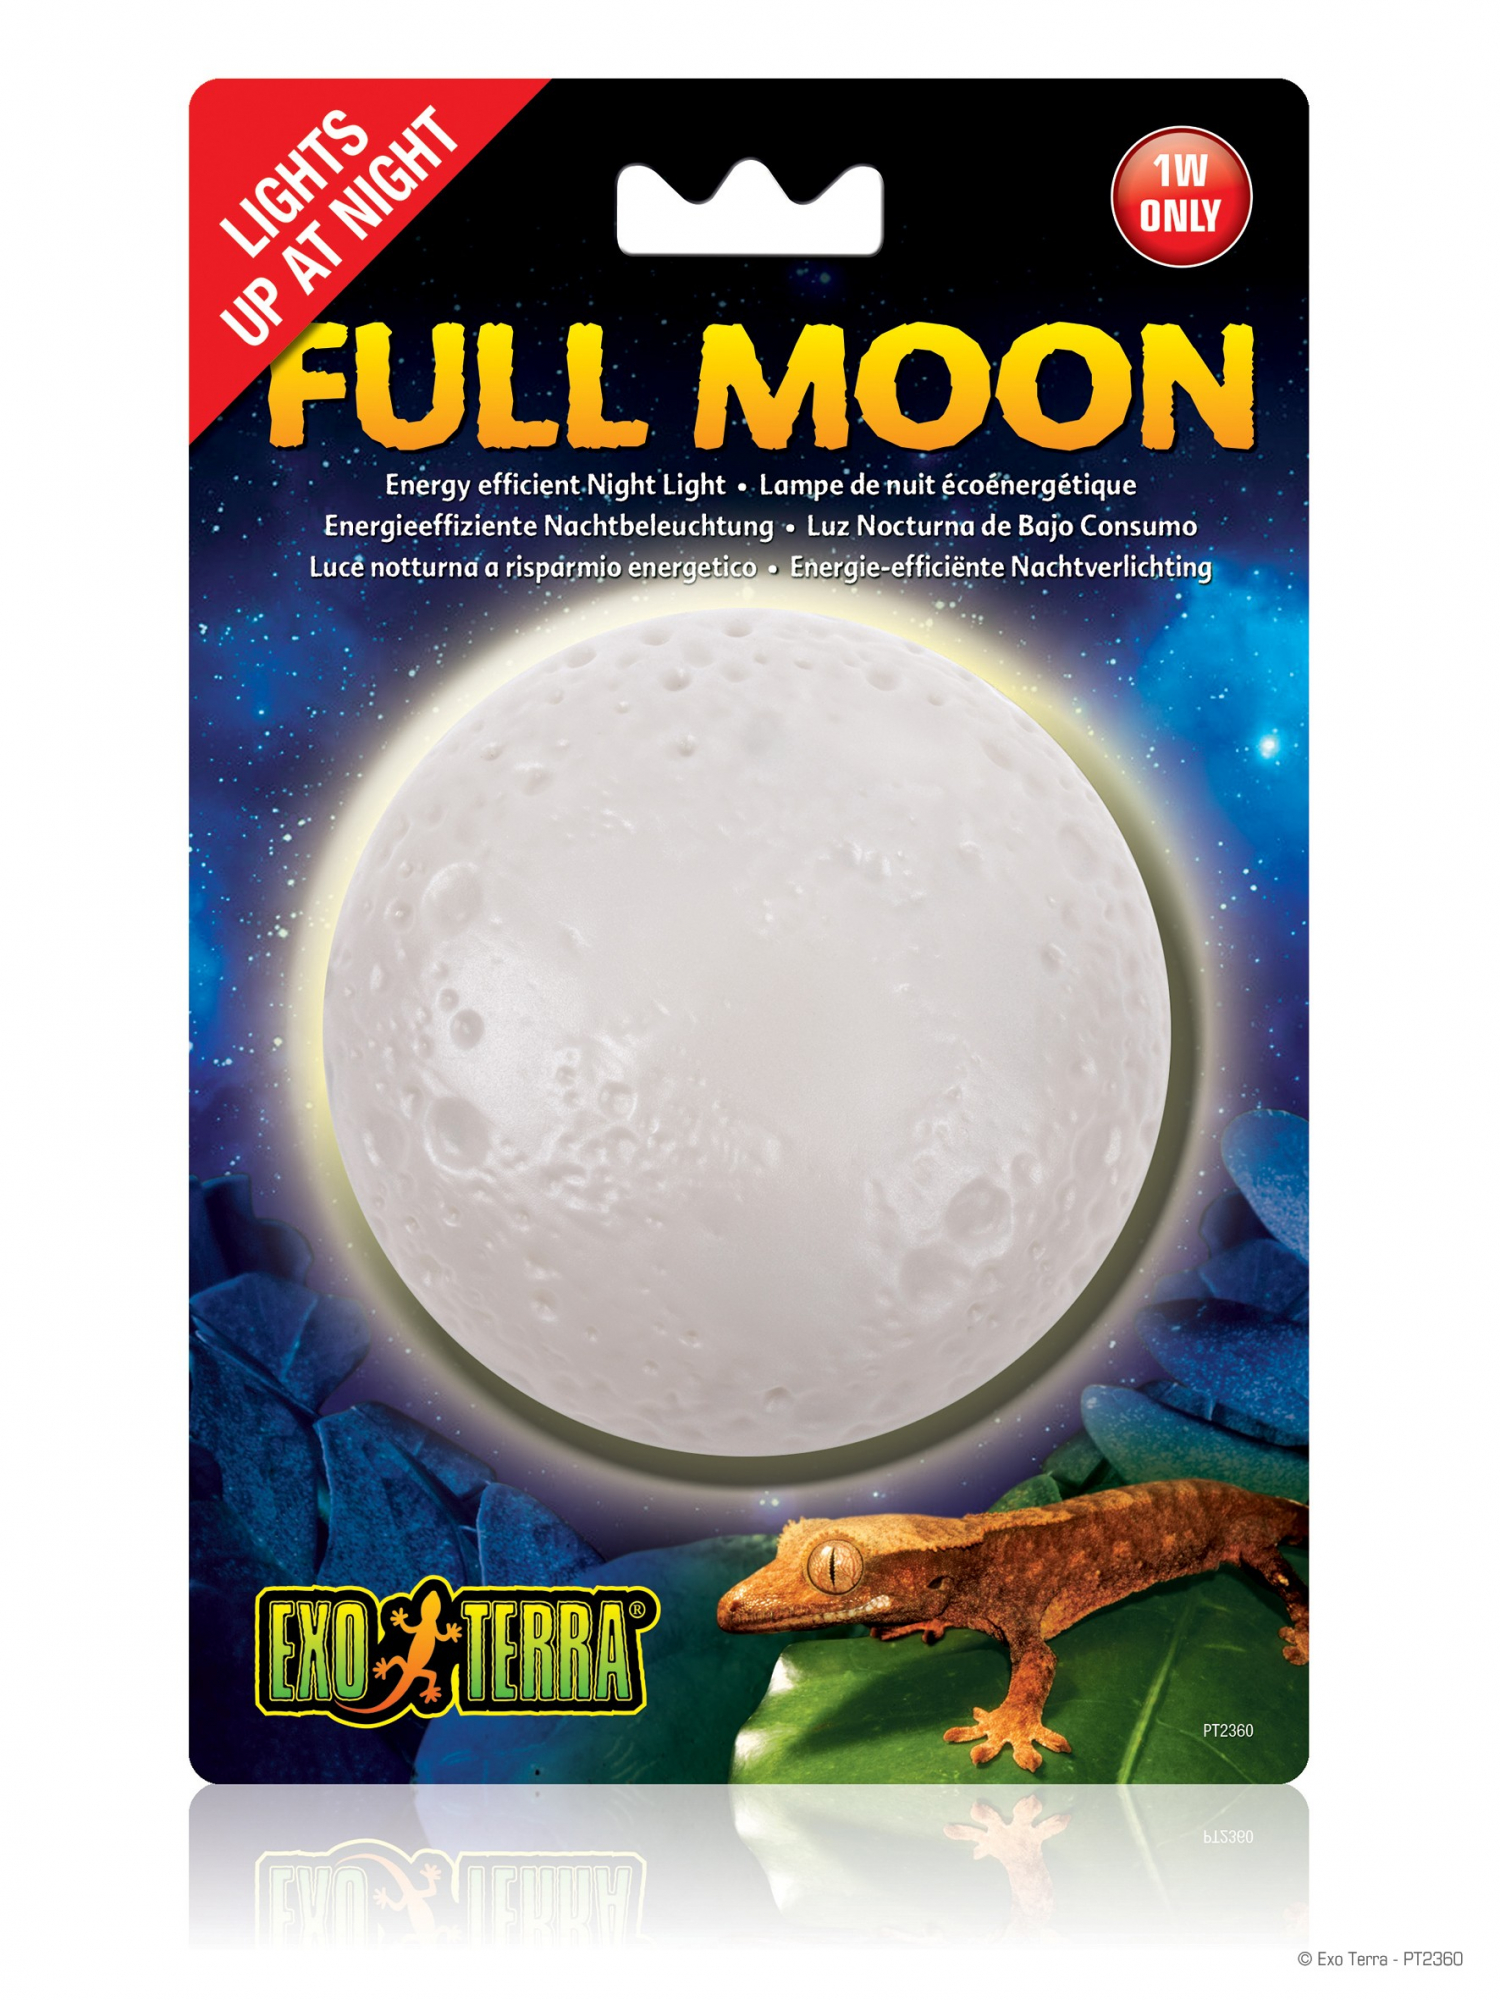 Exo Terra Full Moon Lâmpada nocturna energeticamente eficiente